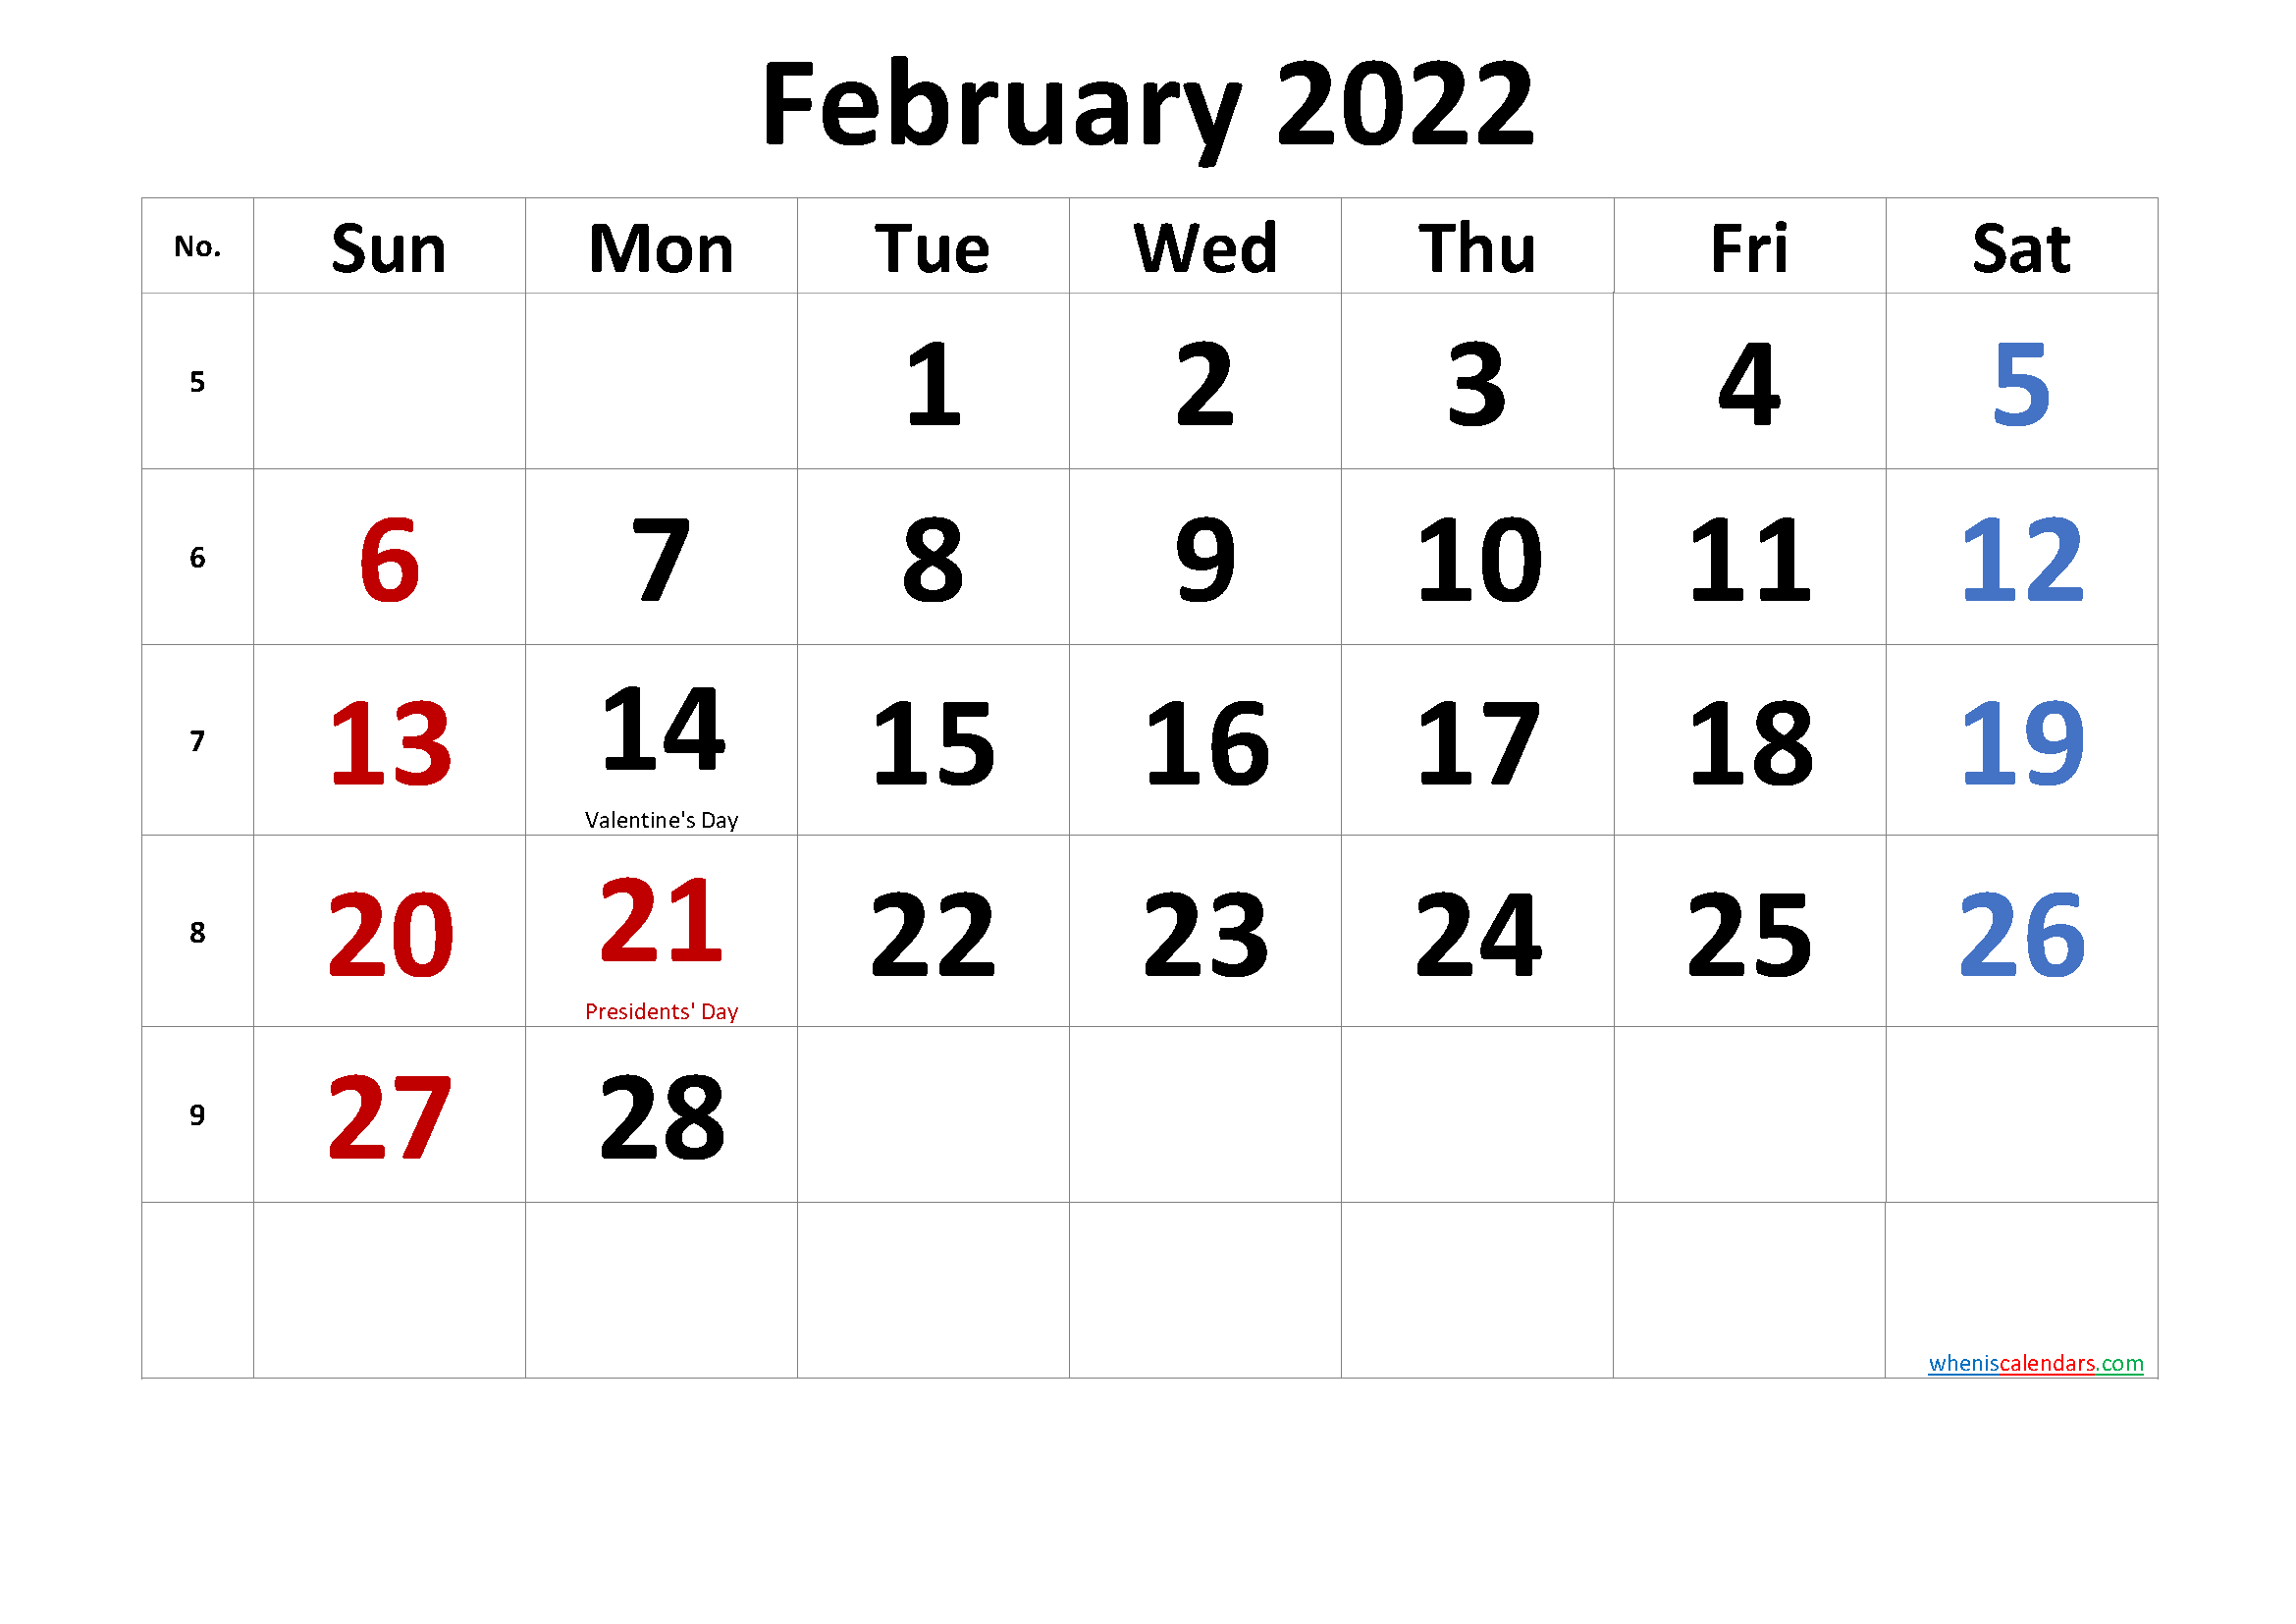 Feb 2022 Calendar - Calendar 2022